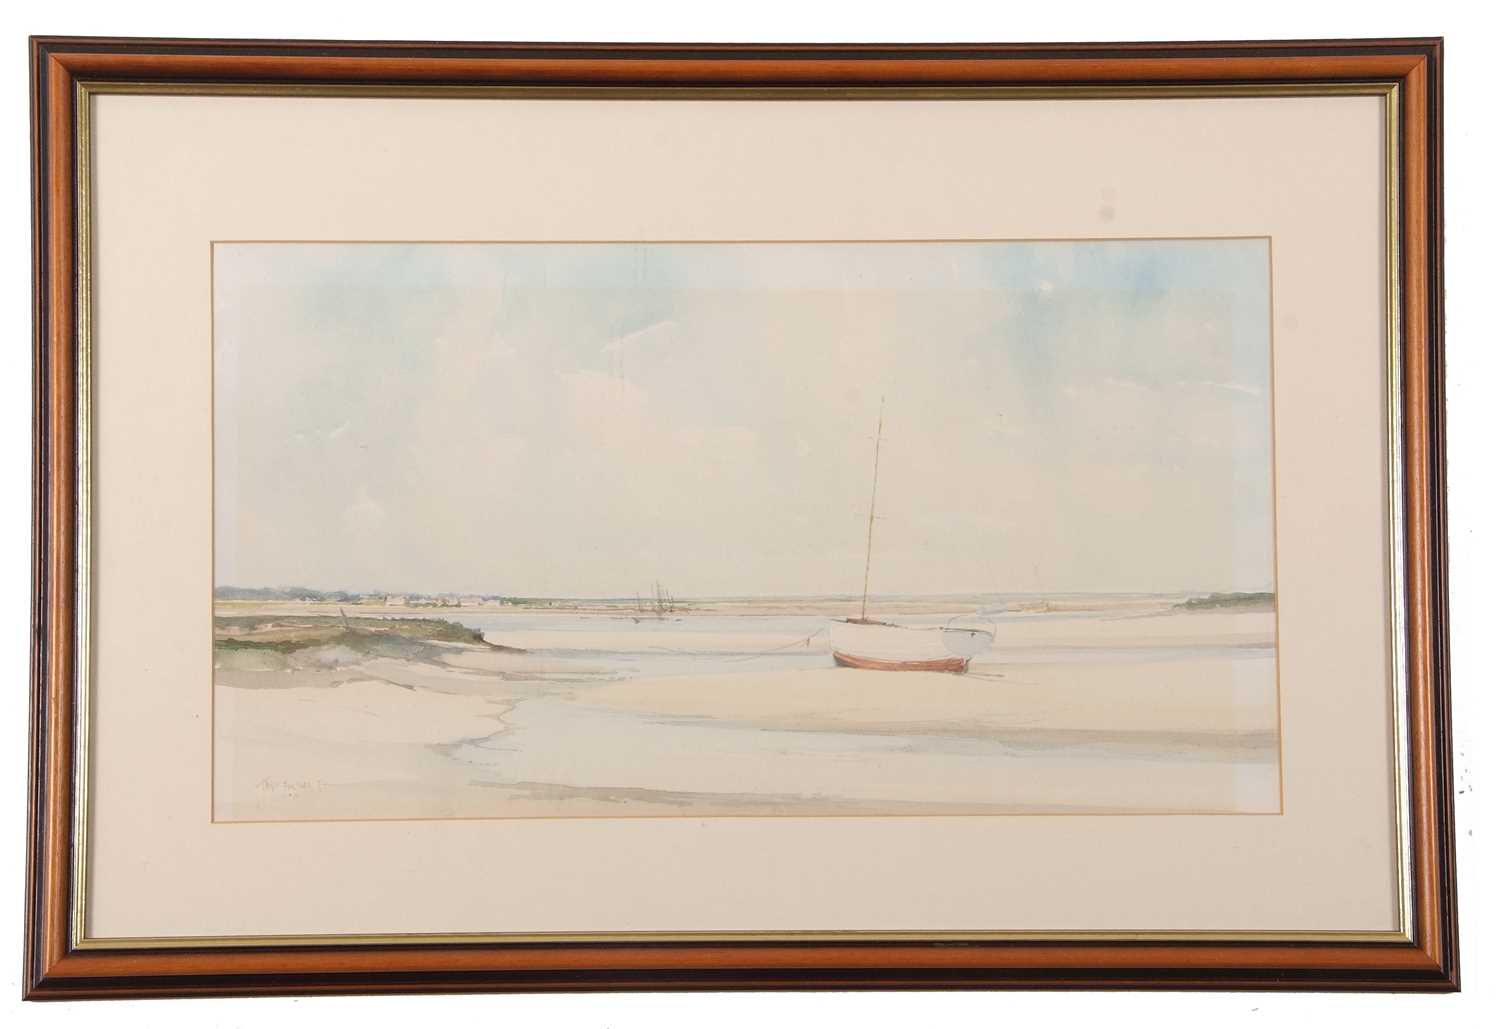 Jason Partner (British, 20th century), High Tide at Blakeney, watercolour, dated '74, 24x44cm,